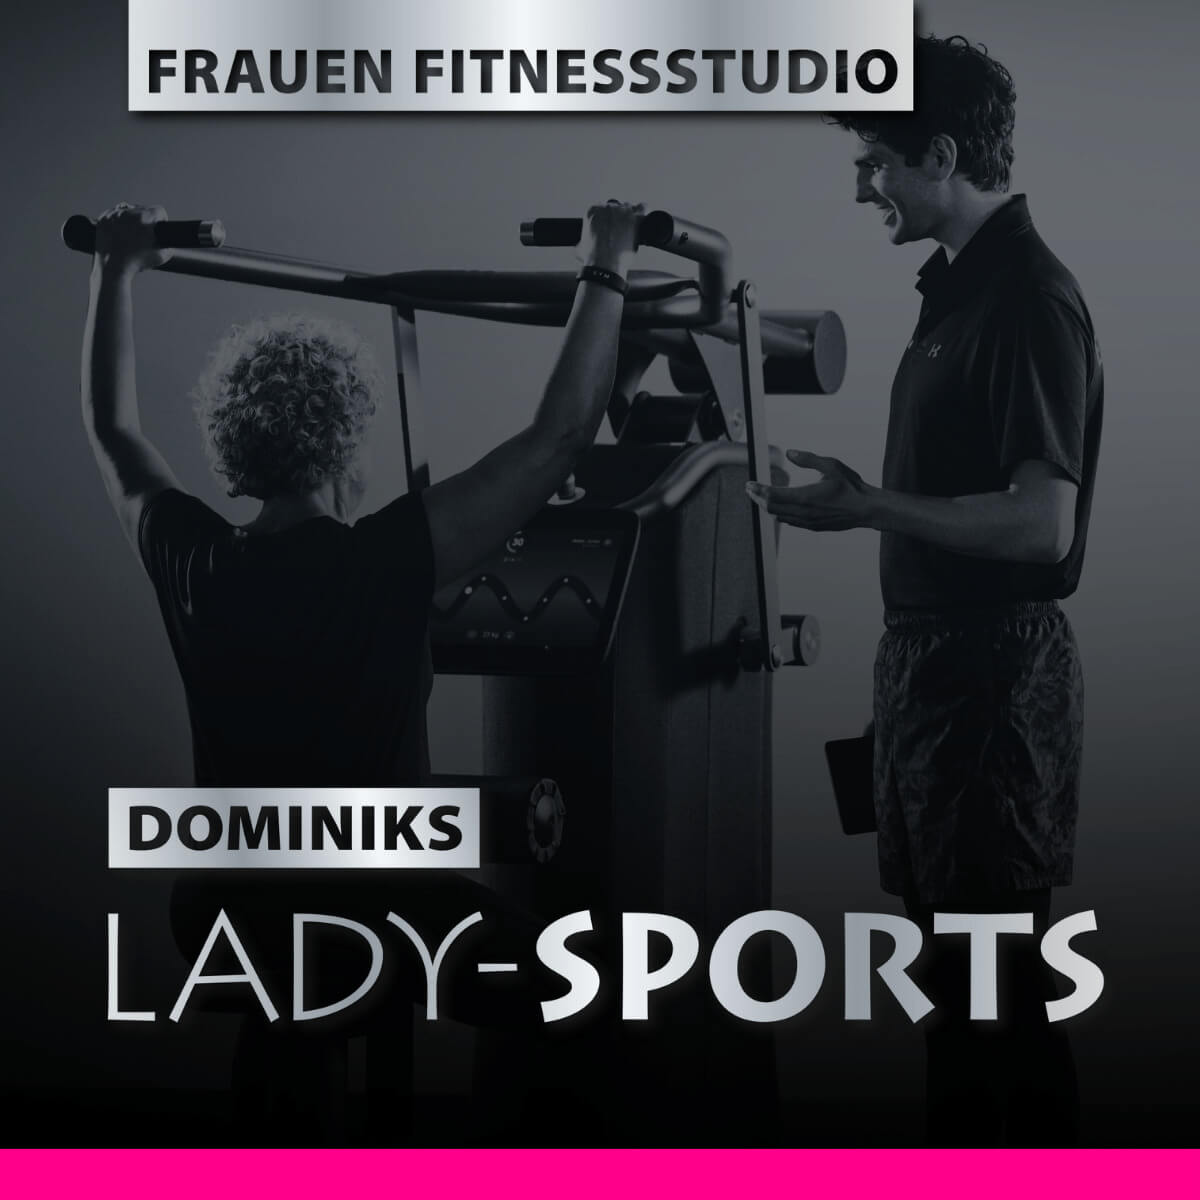 DOMINIKS Fitnessstudio Lady-Sports Frauenfitness